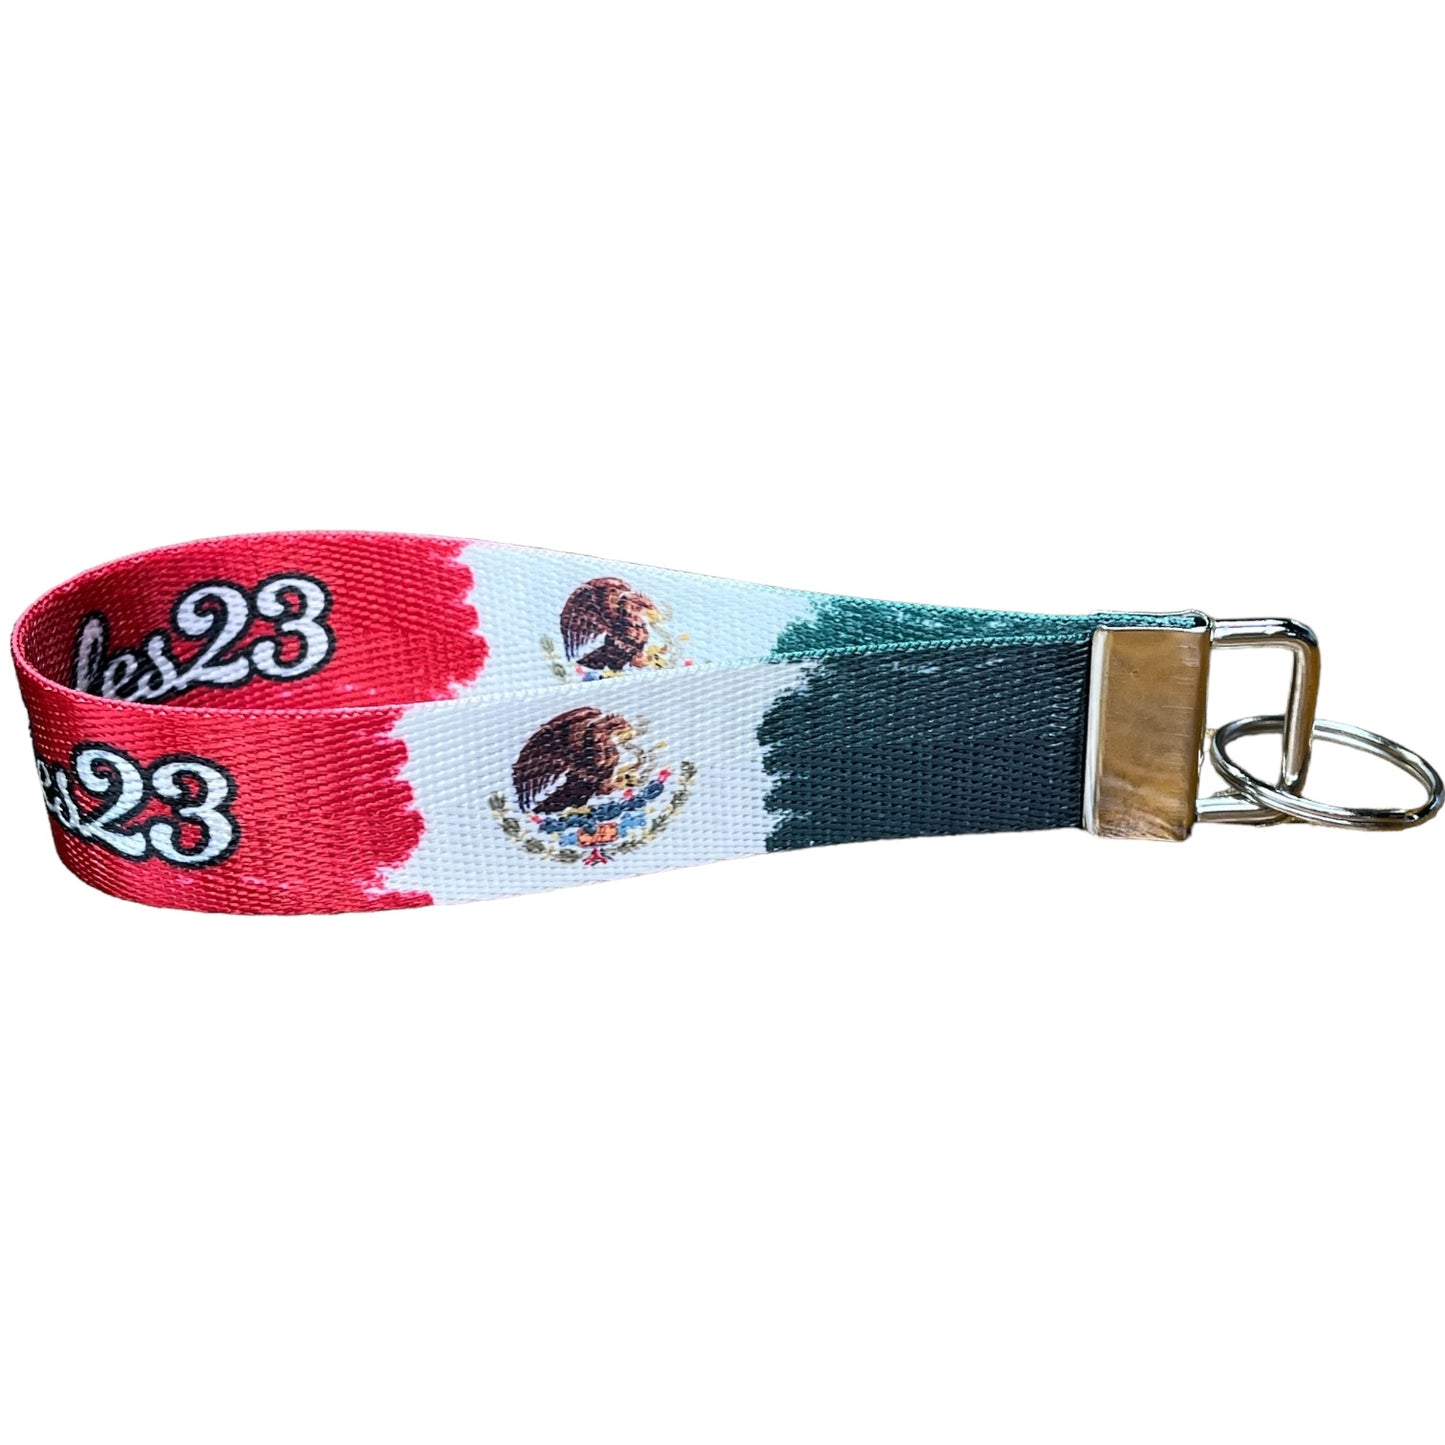 Artistic Mexican Flag Personalized Name Nylon Key Fob - Custom Mexico Wristlet Keychain